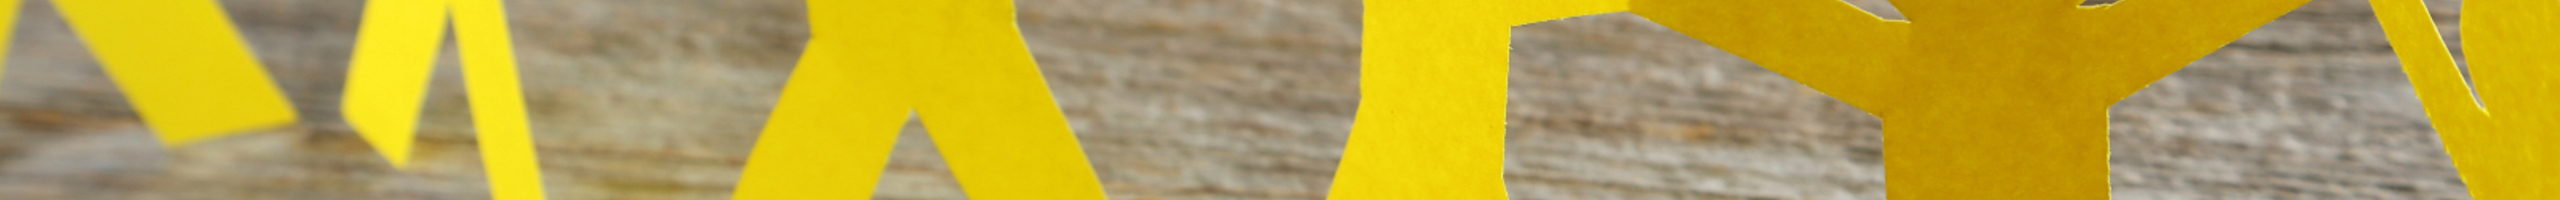 Shutterstock Yellow Paper 1620w (1)